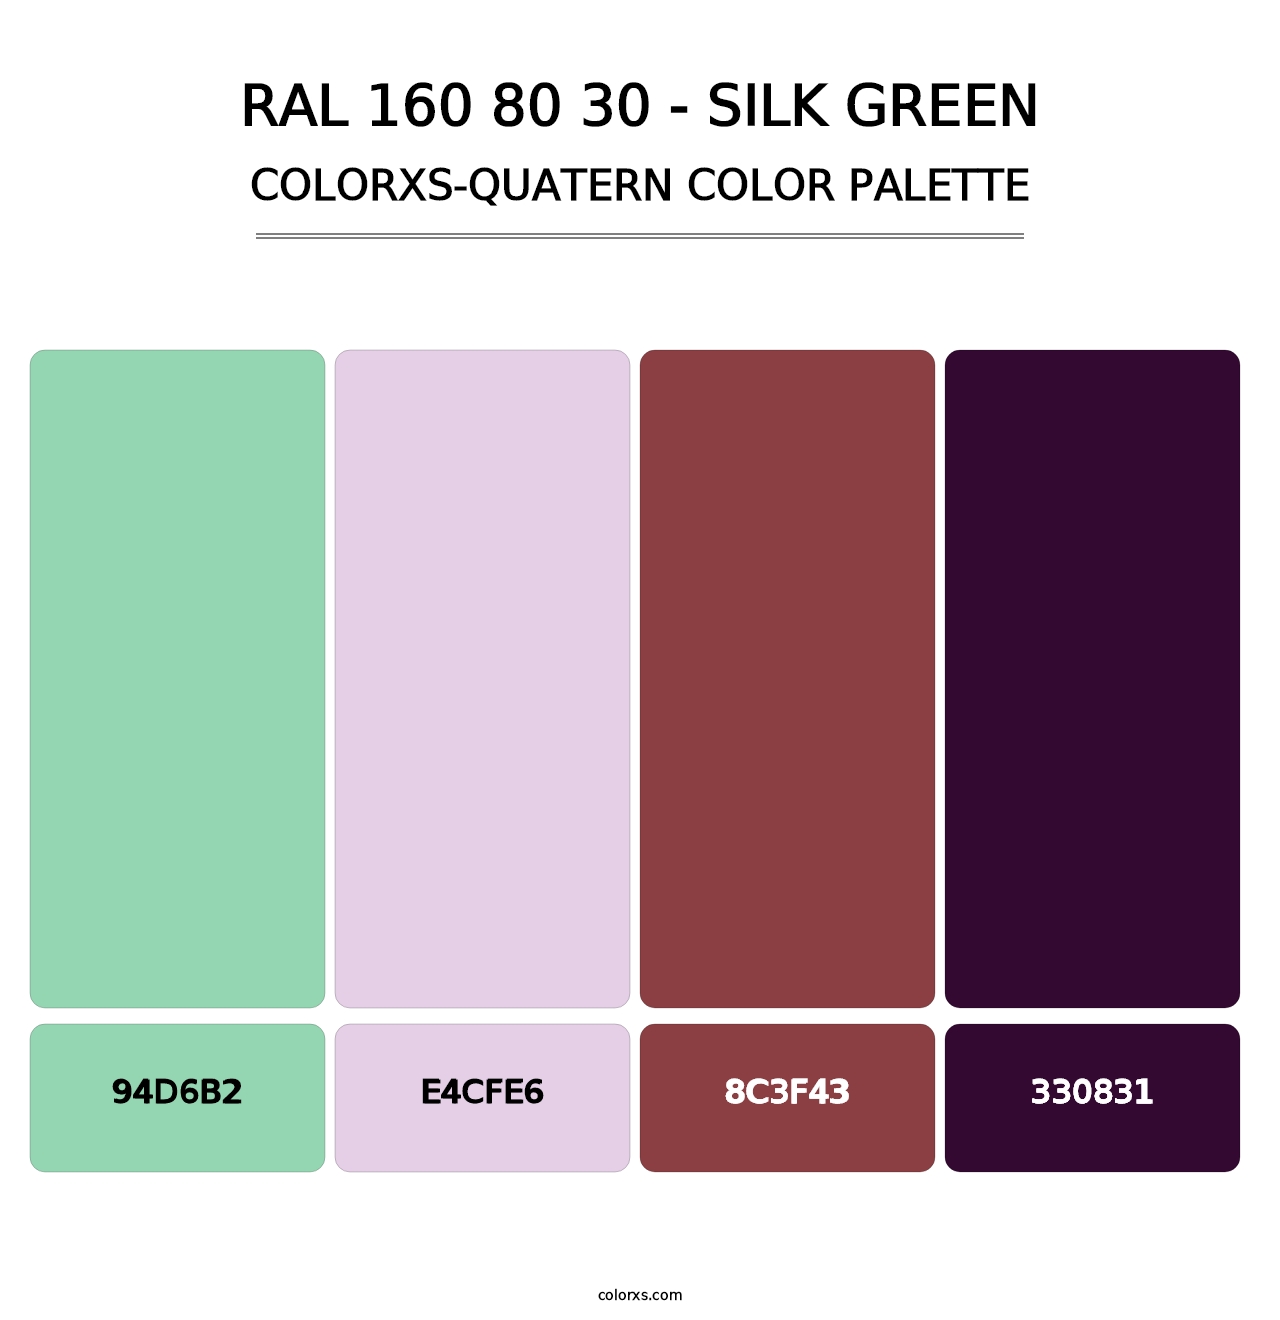 RAL 160 80 30 - Silk Green - Colorxs Quatern Palette